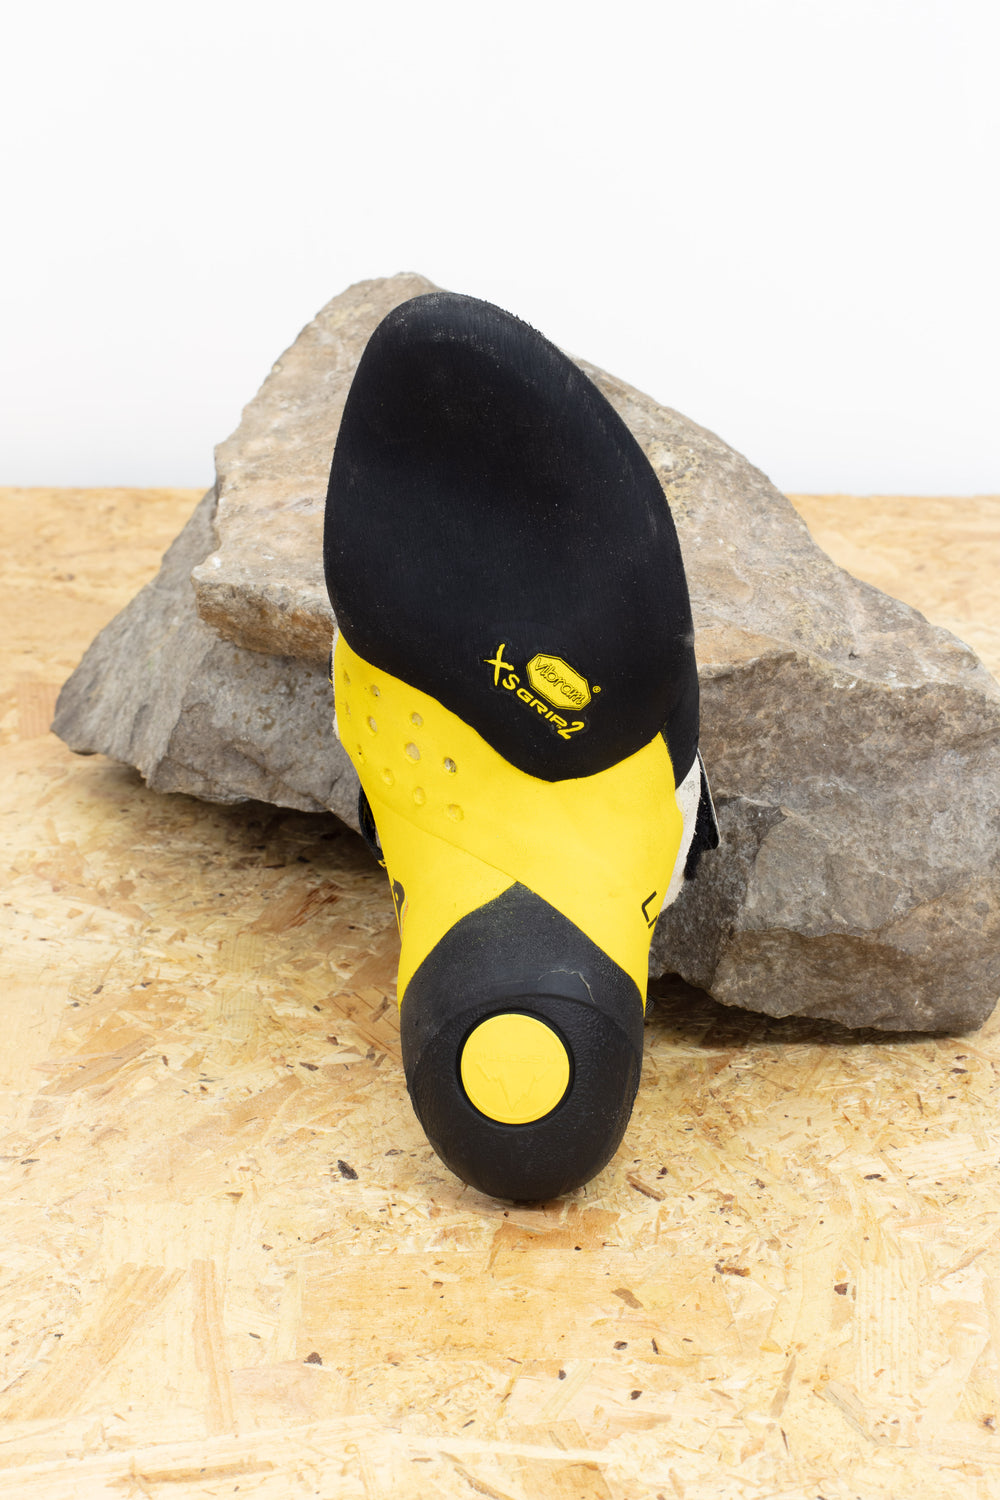 La Sportiva Solution Climbing Shoes Pink 35.5 – Trail Hut